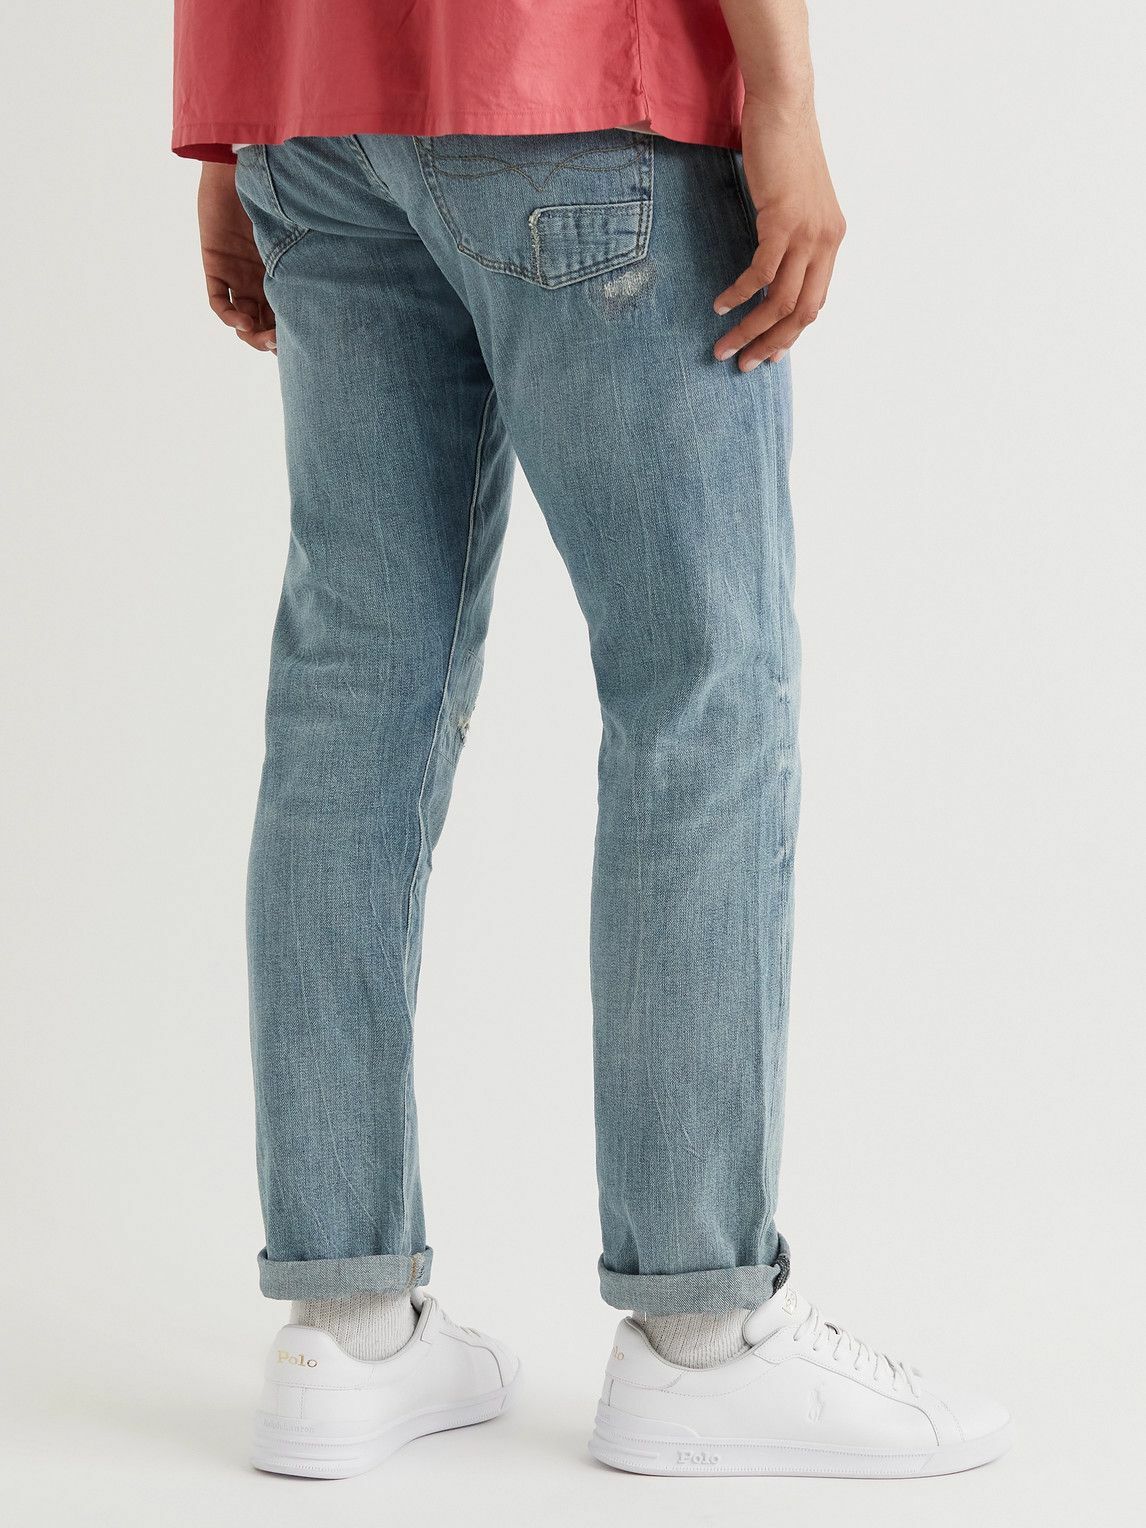 Polo Ralph Lauren - Slim-Fit Distressed Jeans - Blue